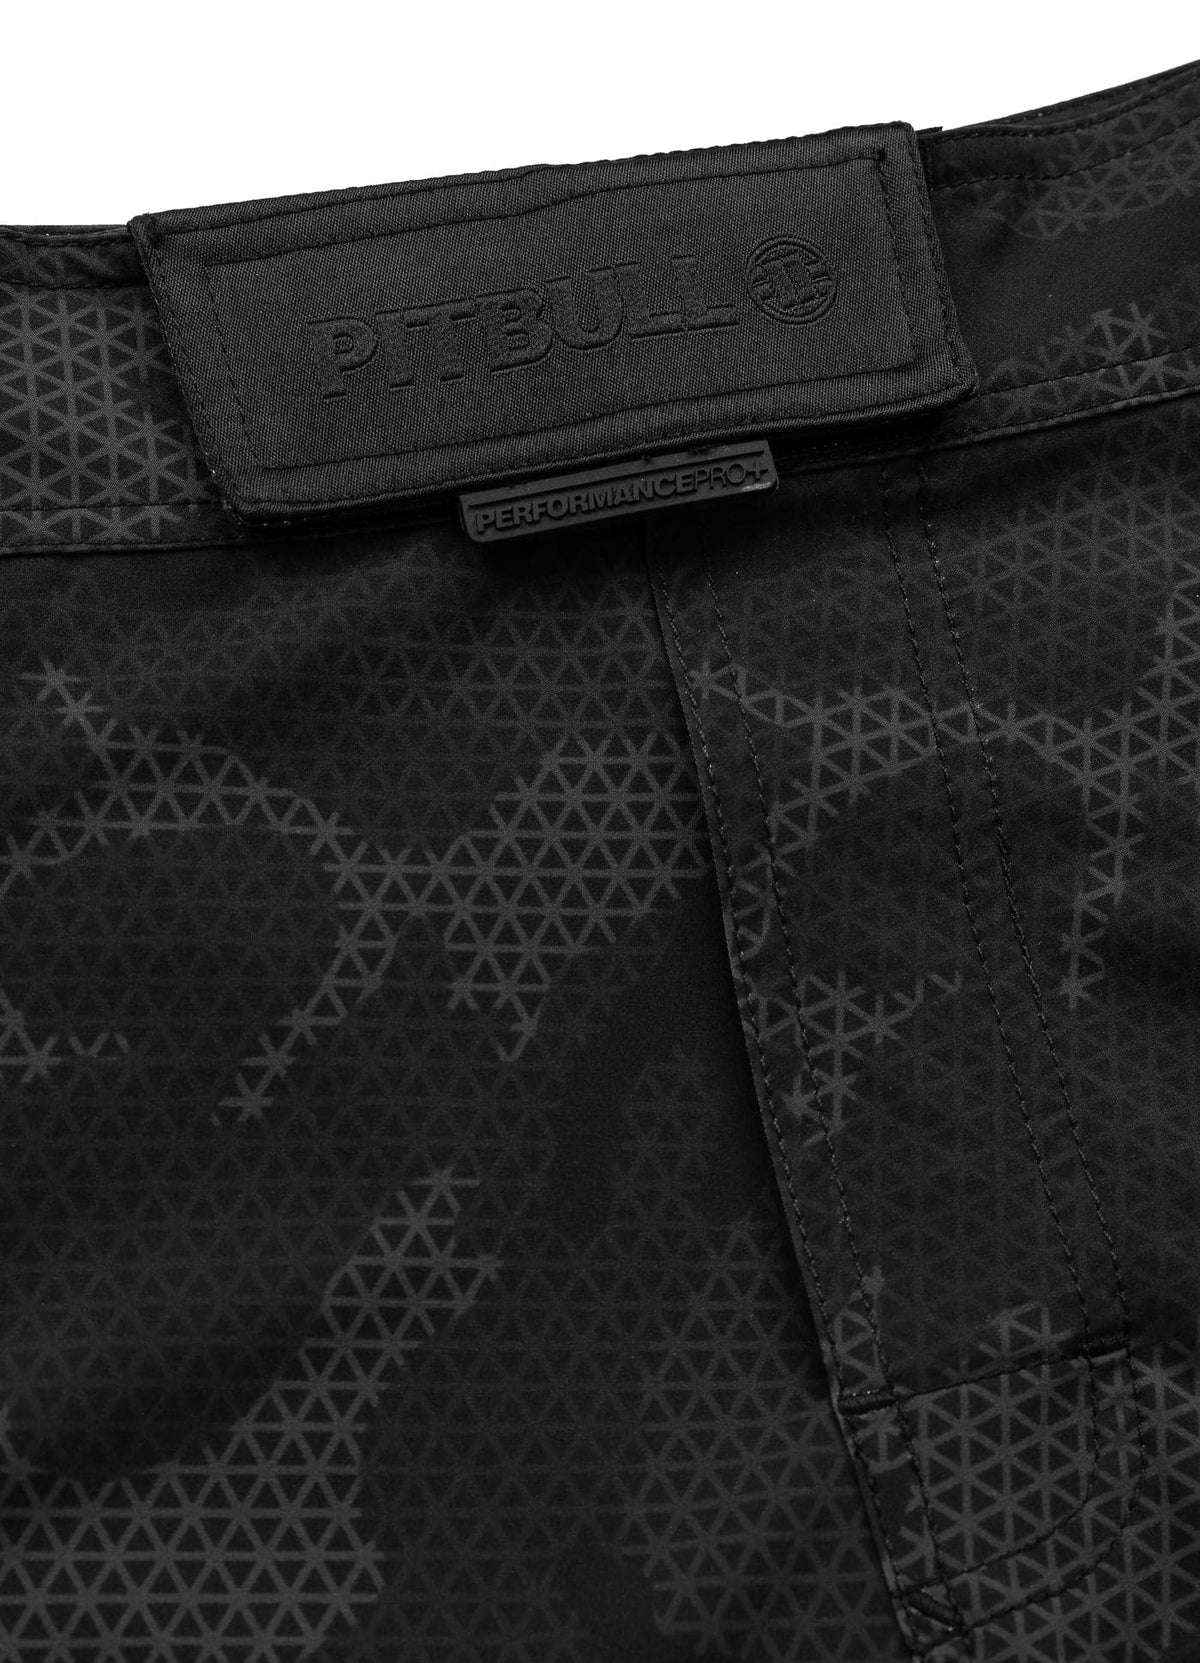 NET CAMO 2 All Black Camo Grappling Shorts 1.